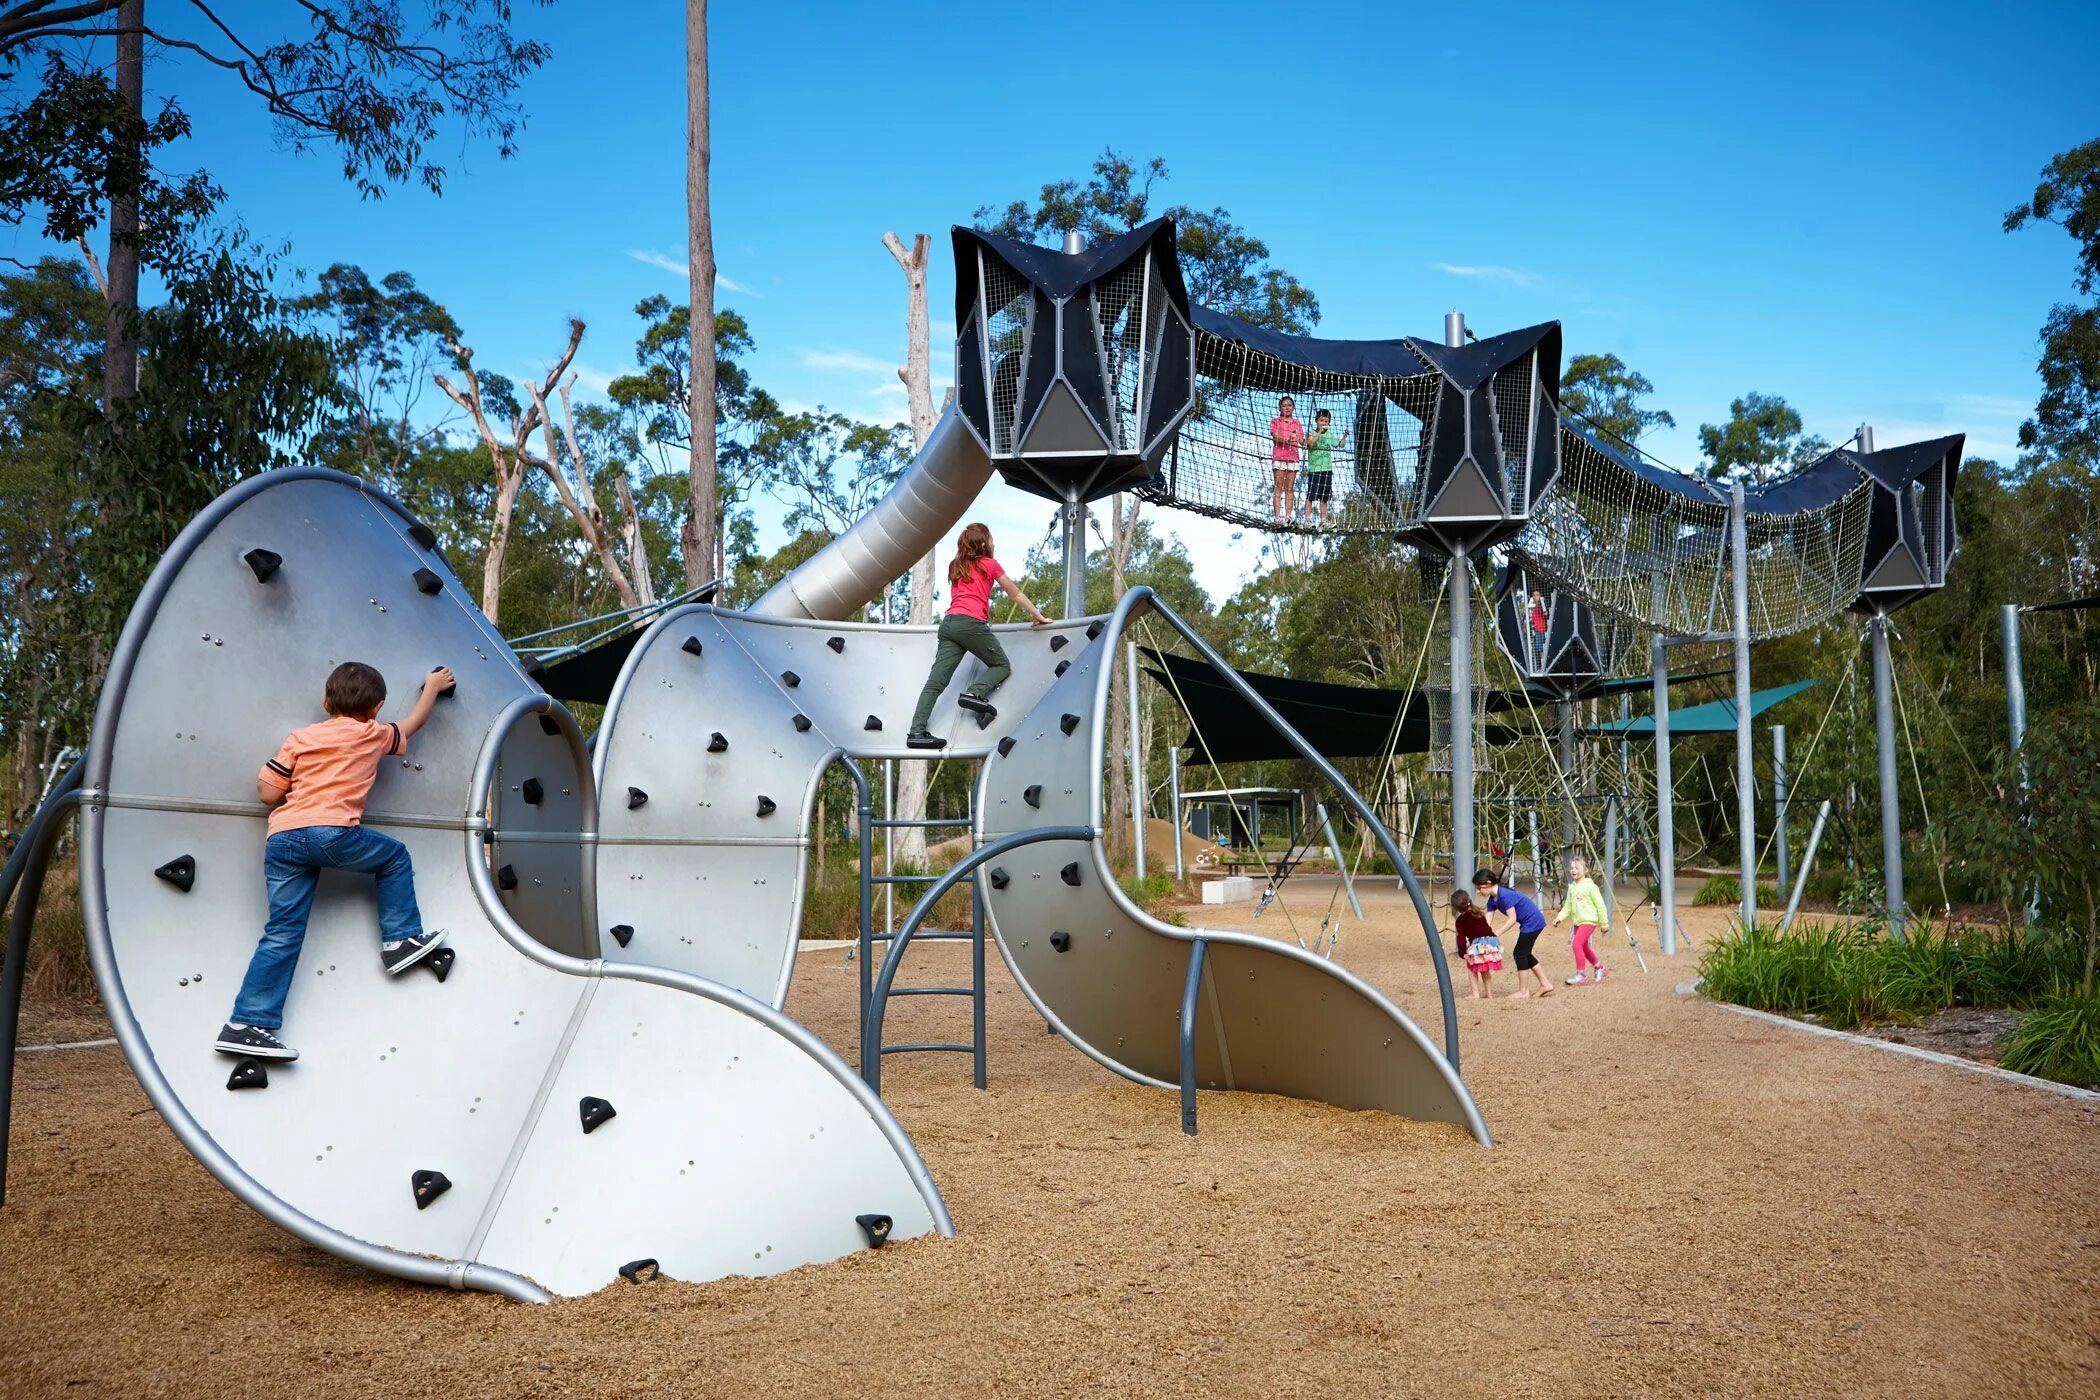 The Playground. Playground at the Park. Kids детская площадка panties. Парк клево